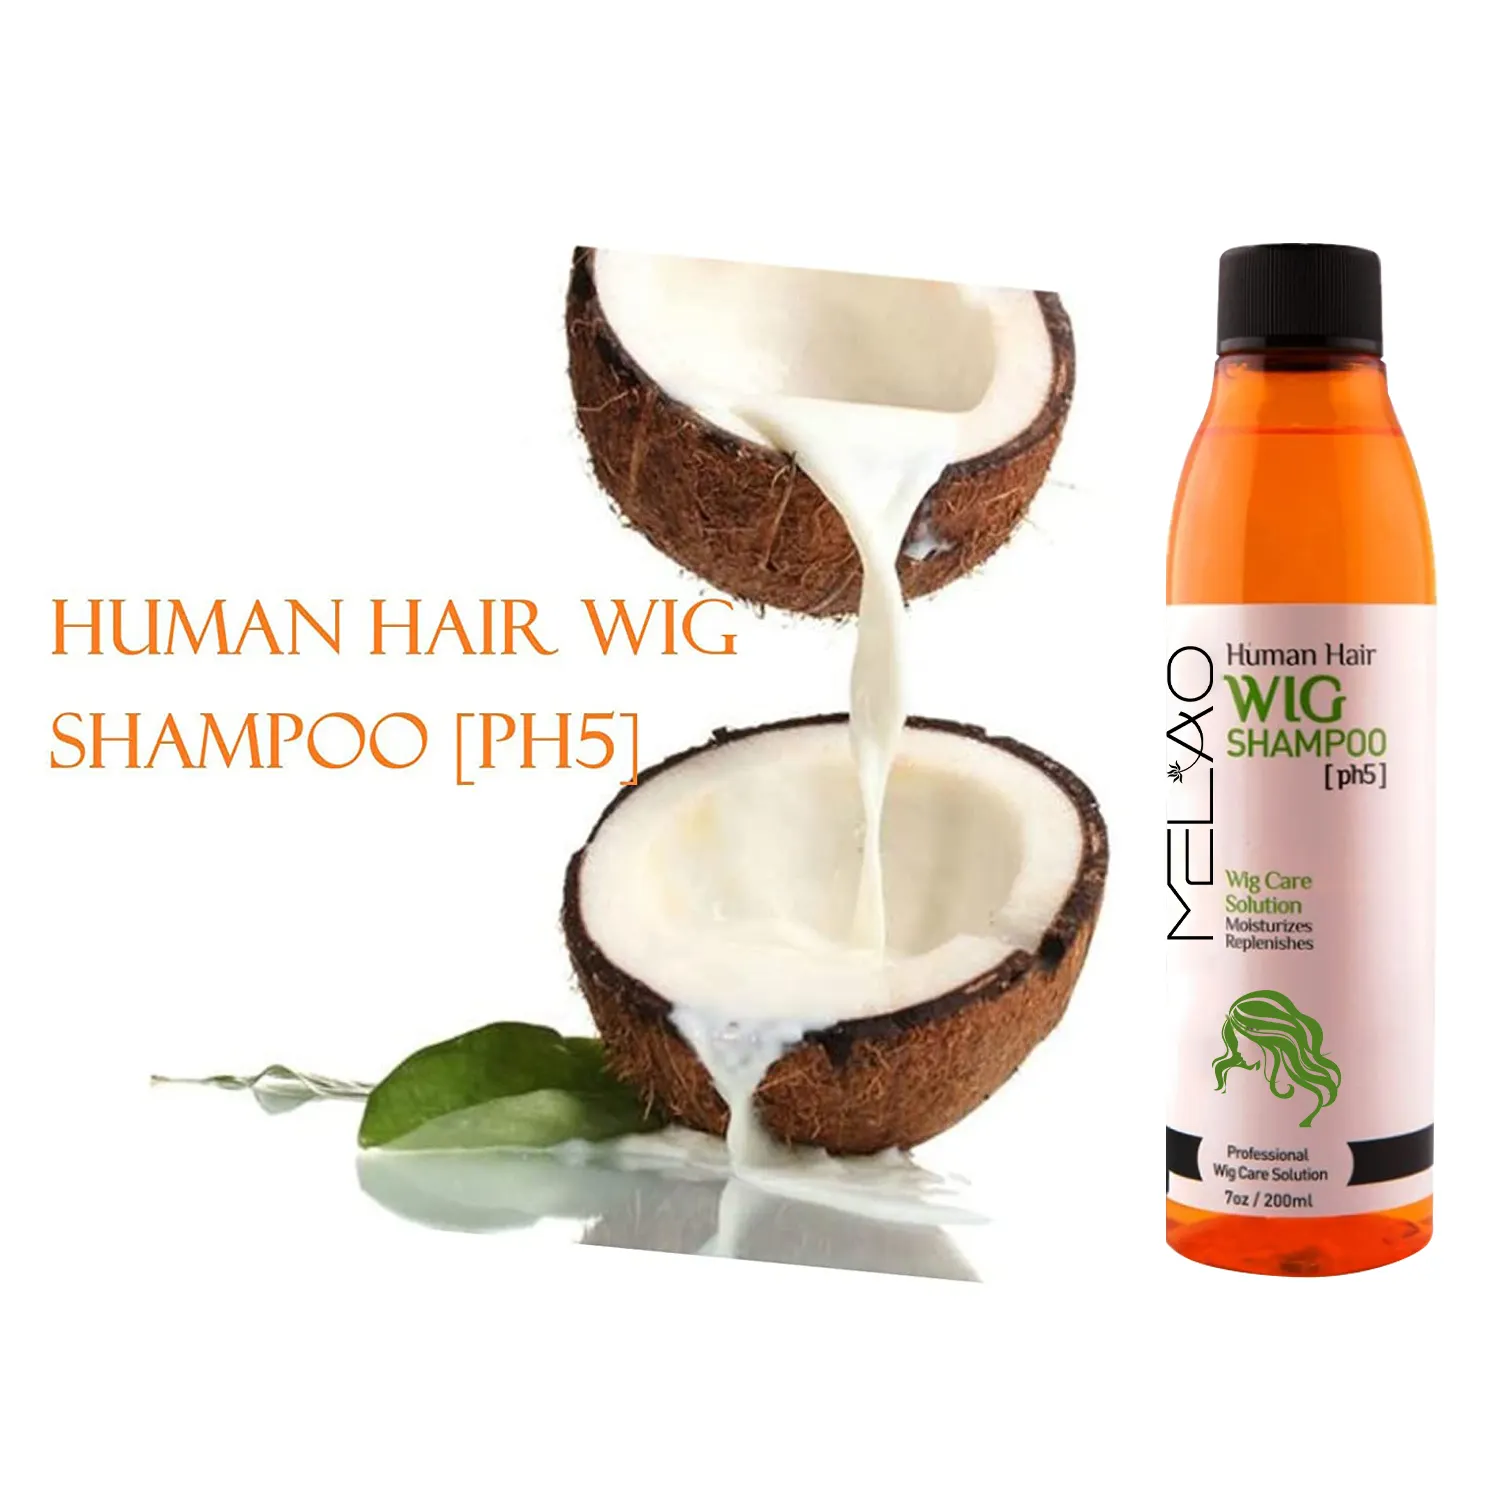 Hidratante orgânico da etiqueta privada do fornecedor, venda quente, limpeza profunda do cabelo antifrizz, shampoo e condicionador